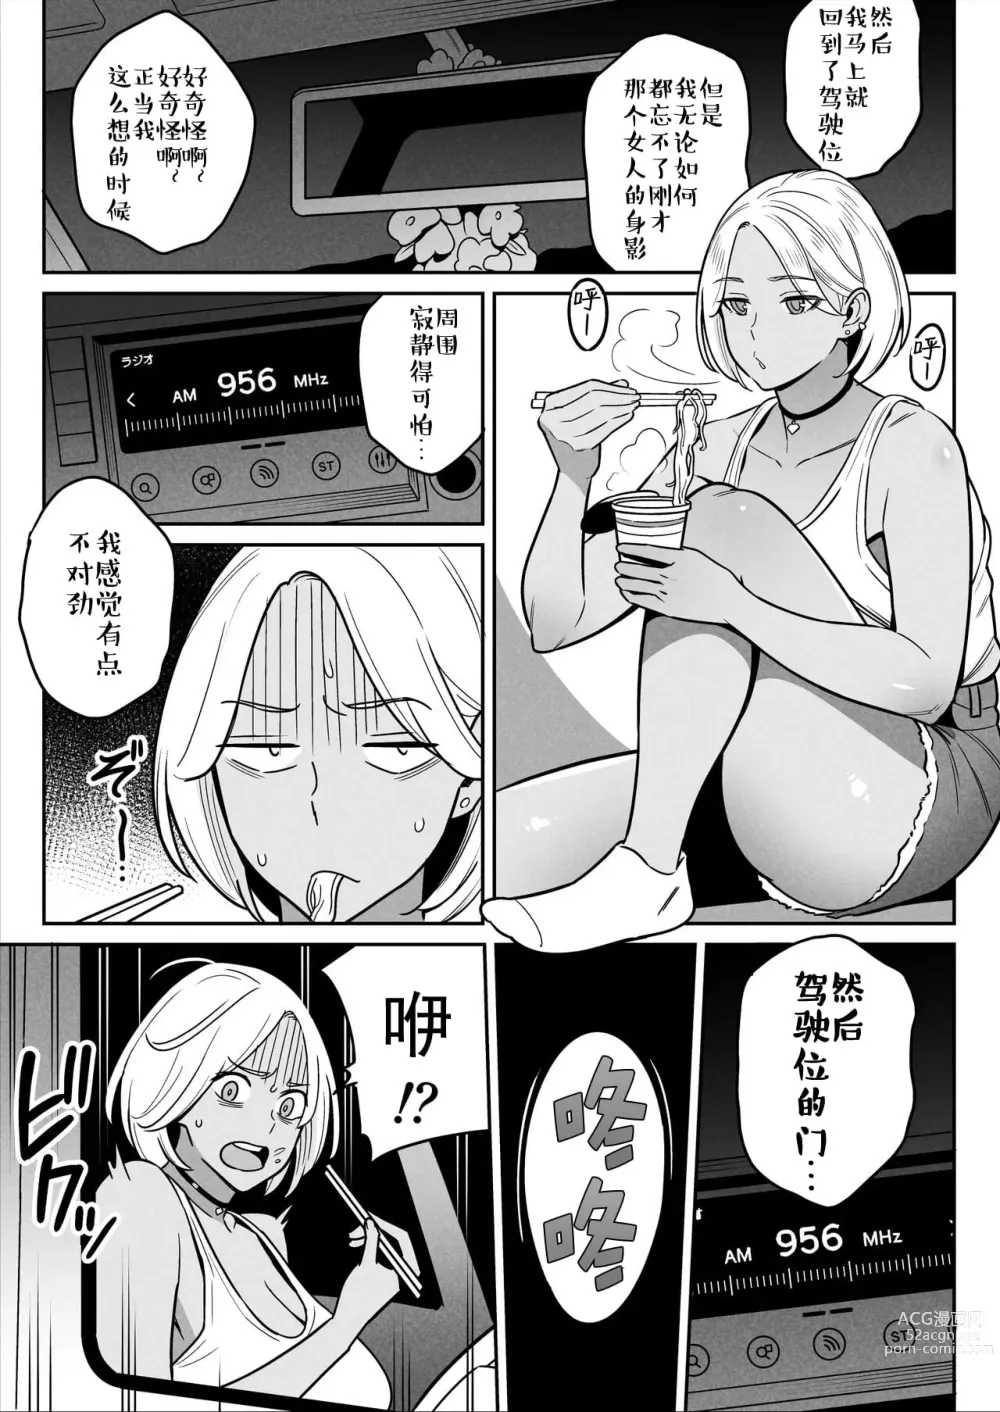 Page 10 of manga Muchi Niku Heaven de Pan Pan Pan